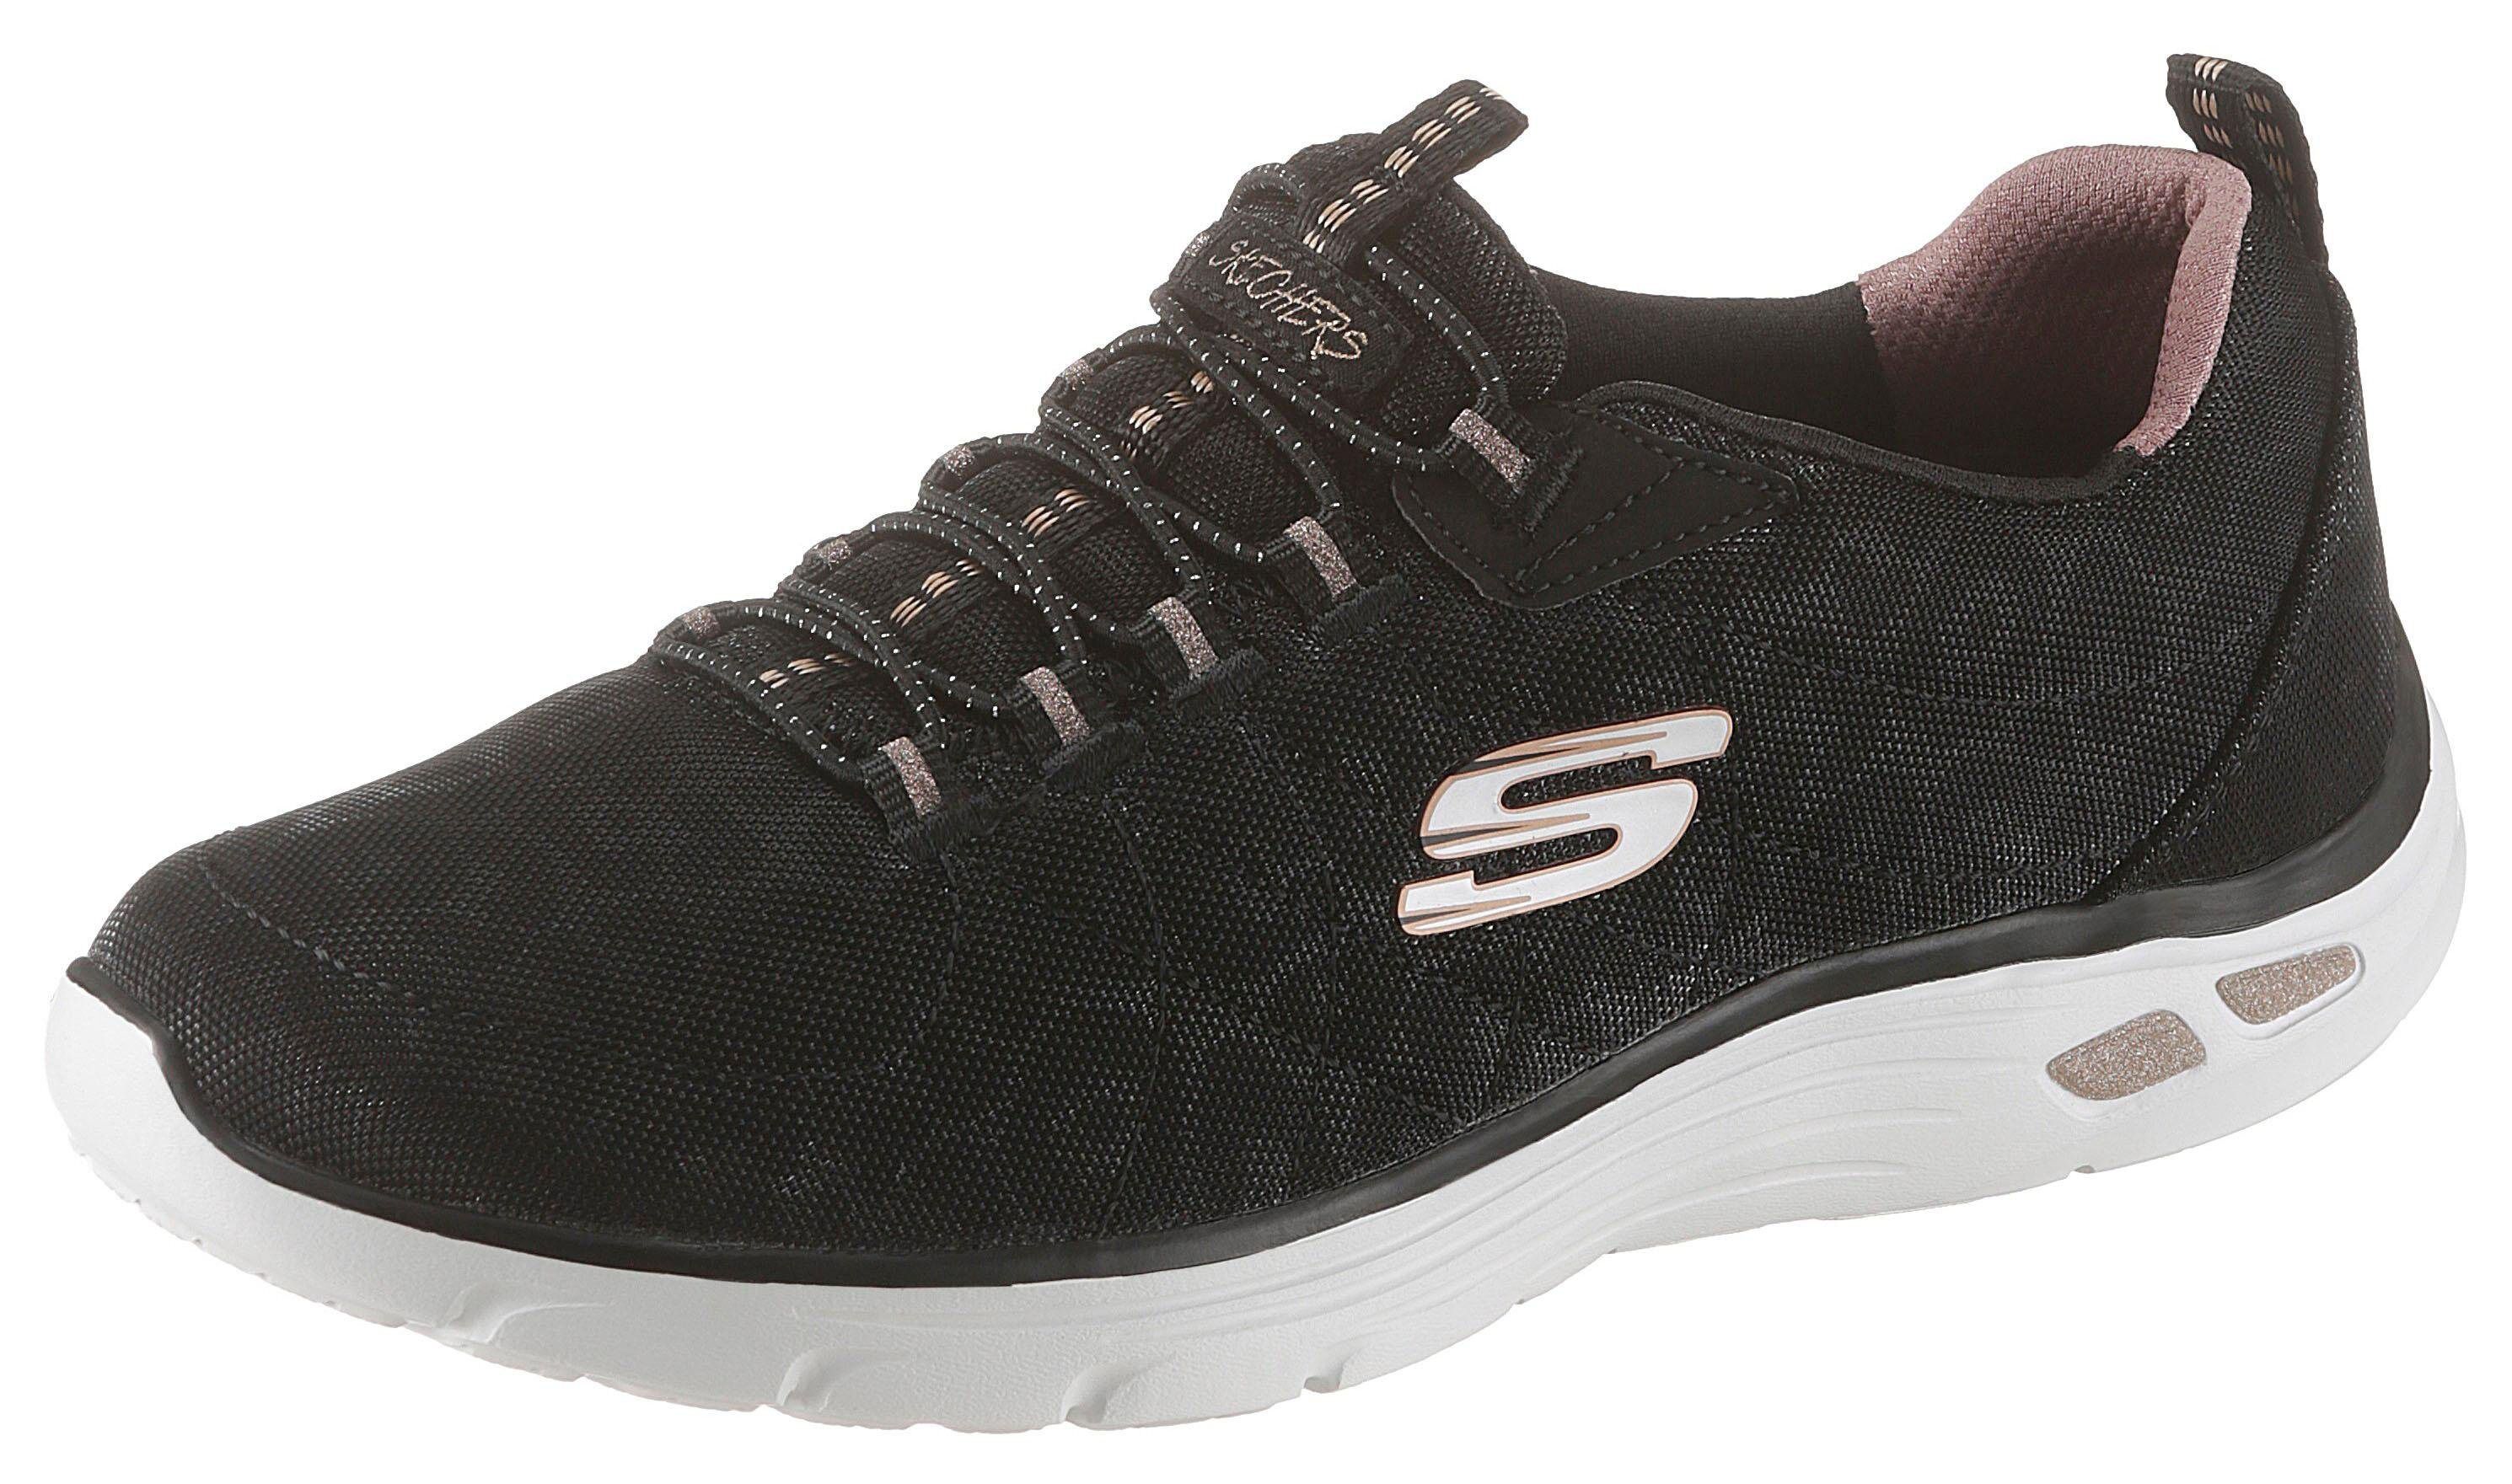 Skechers »Empire D´Lux - Spotted« Slip-On Sneaker mit changierenden Leo-Muster, schwarz-rosé